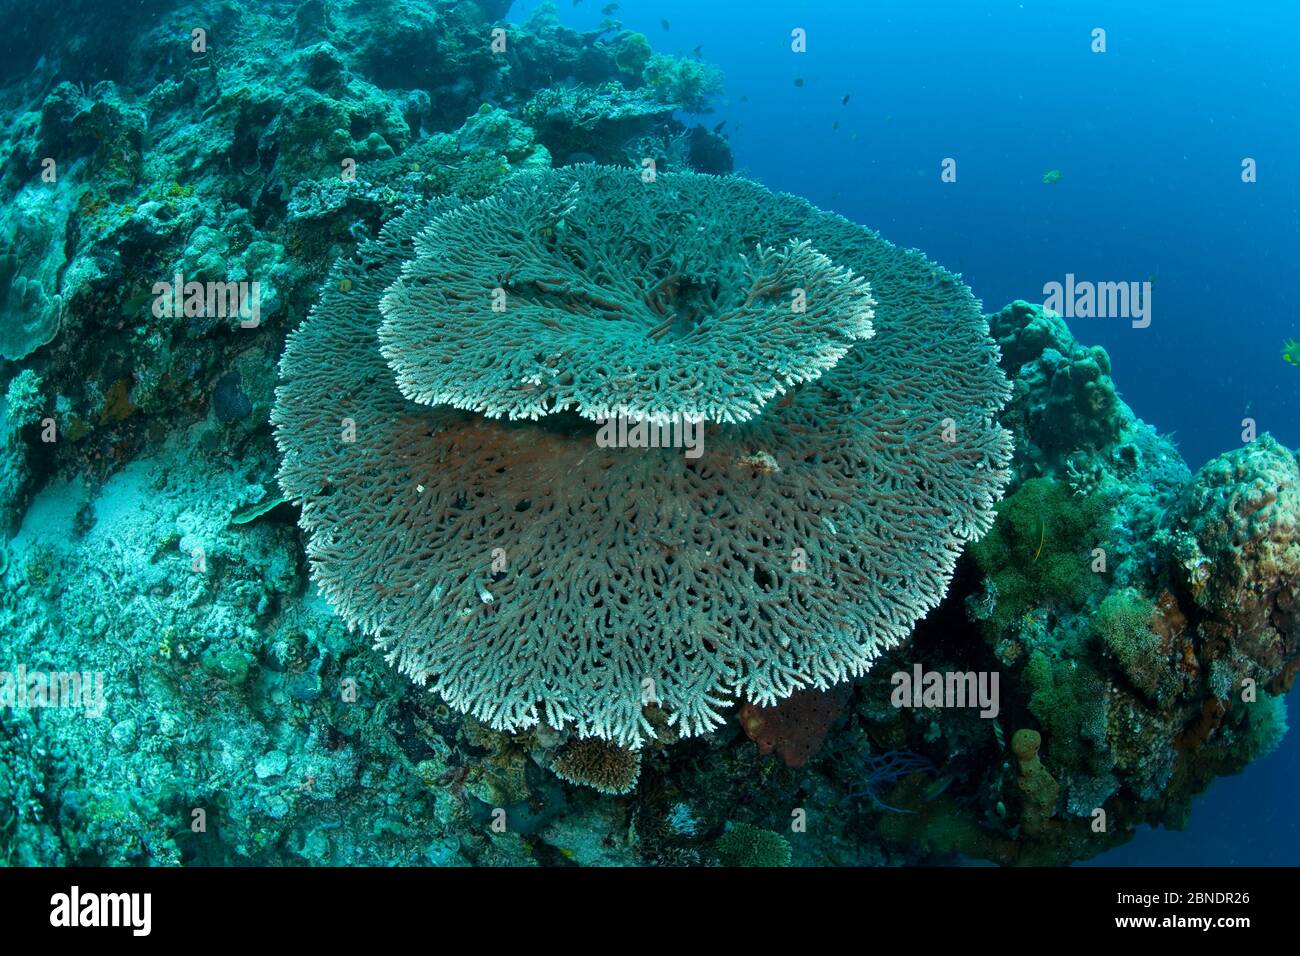 https://c8.alamy.com/comp/2BNDR26/table-hard-coral-acropora-hyacinthus-menjangan-island-bali-island-indonesia-pacific-ocean-2BNDR26.jpg